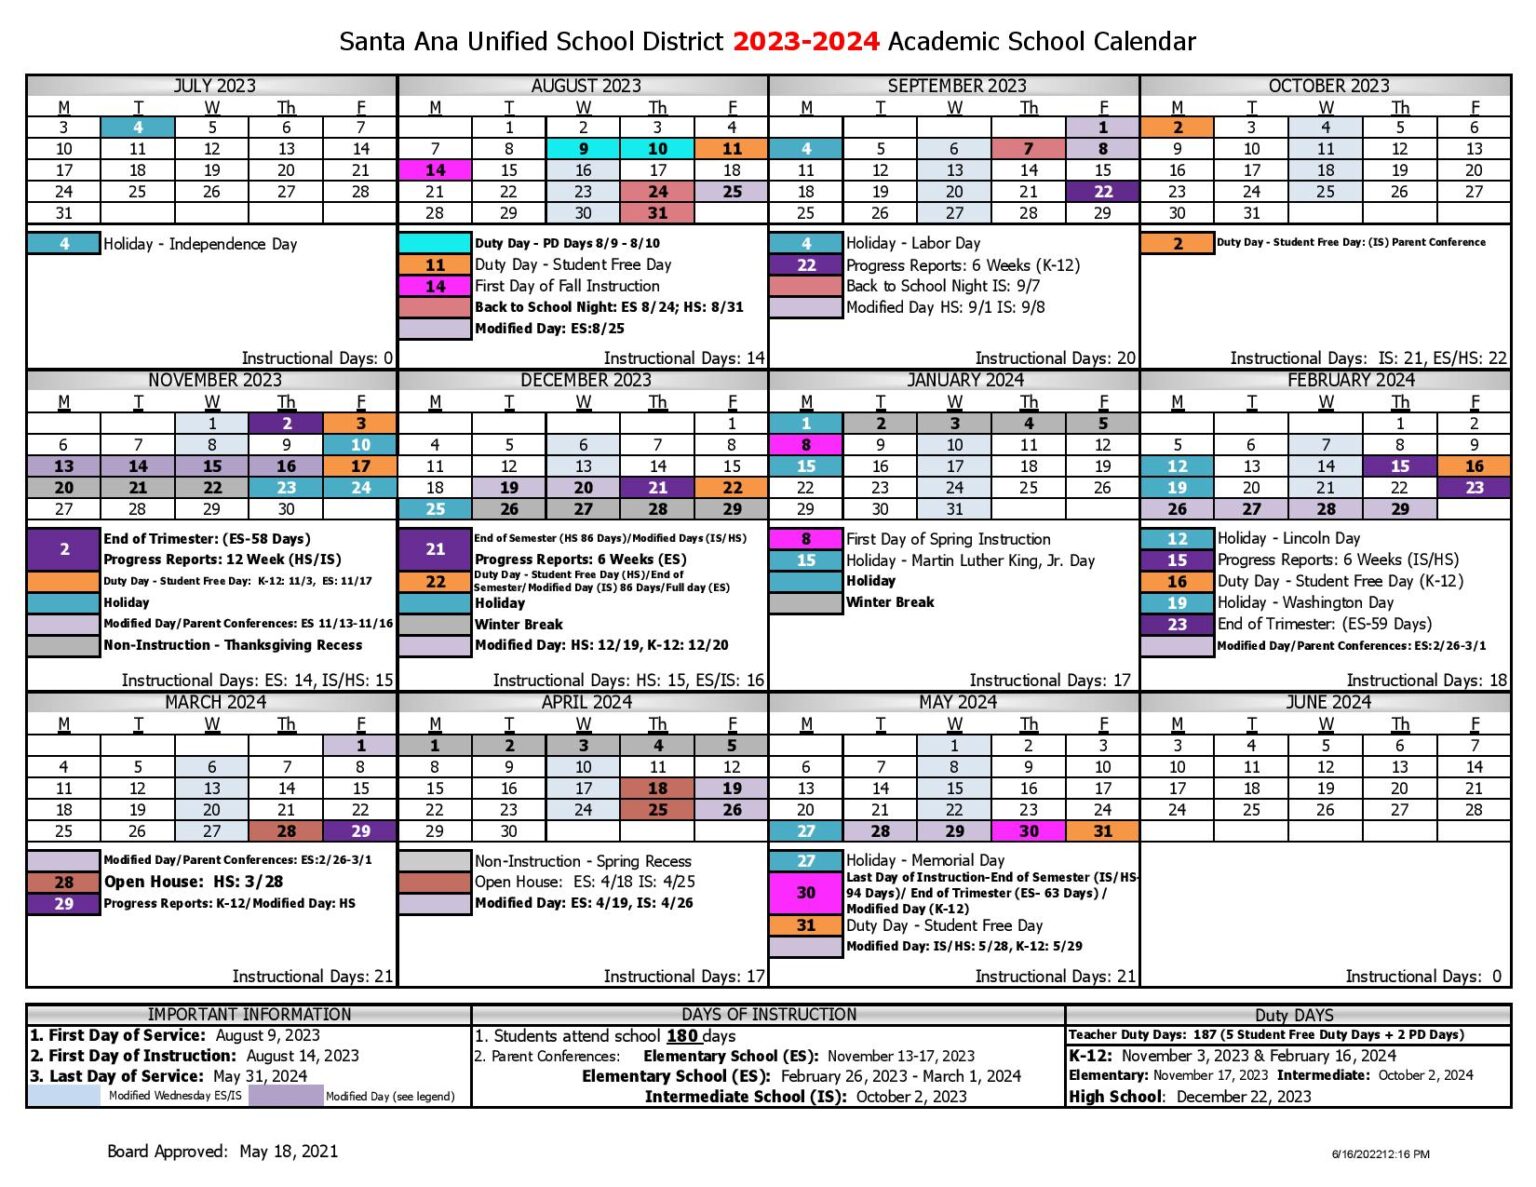 Santa Ana Unified School District Calendar 2023-2024 in PDF